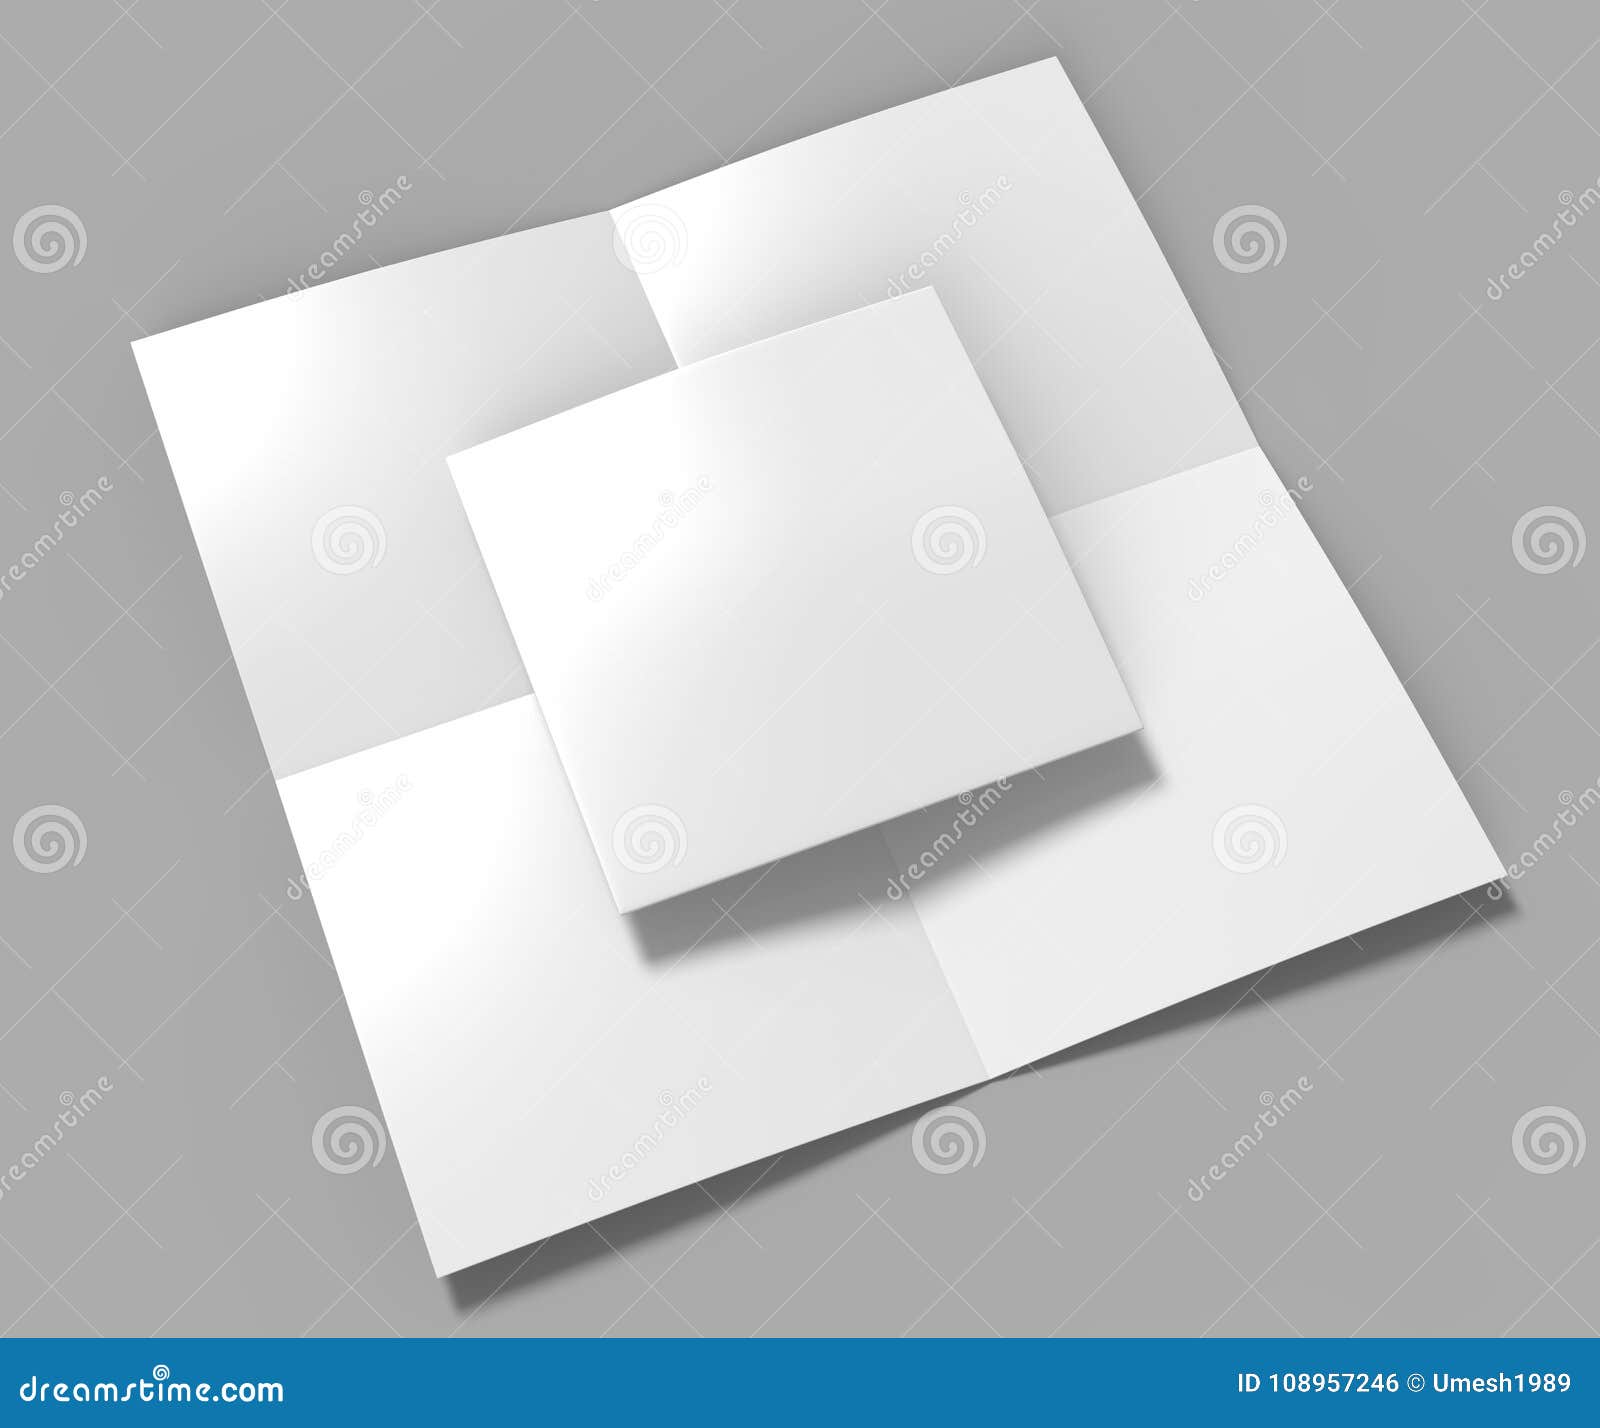 FILFA FRANCE - Mouchoir rectangle blanc - x40